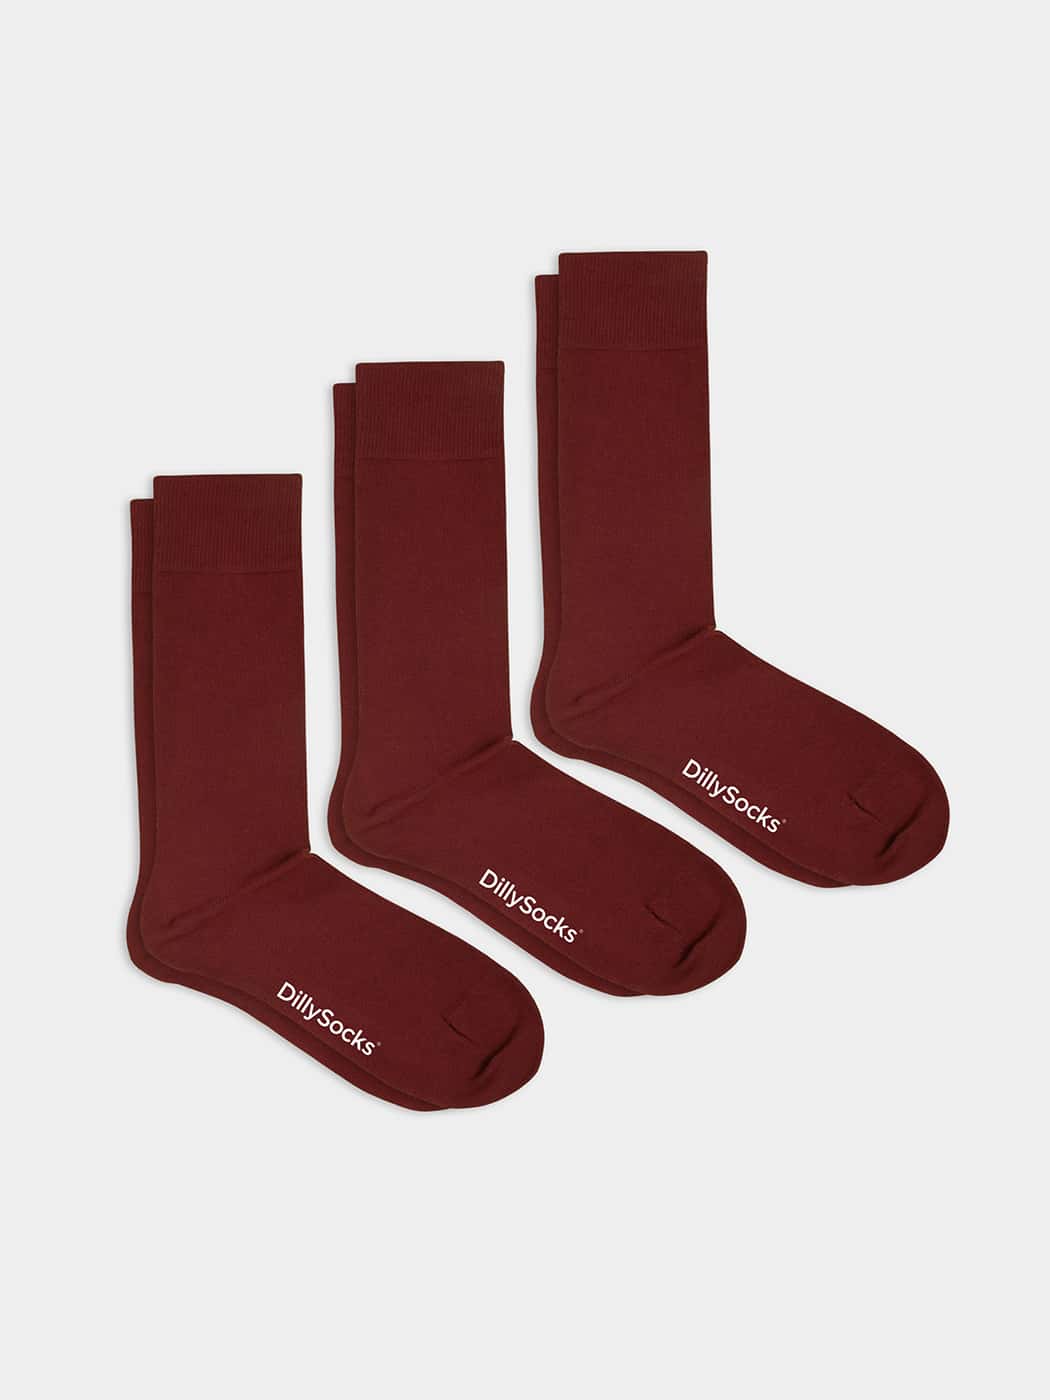 - Socken-Sets in Rot mit Uni Motiv/Muster von DillySocks